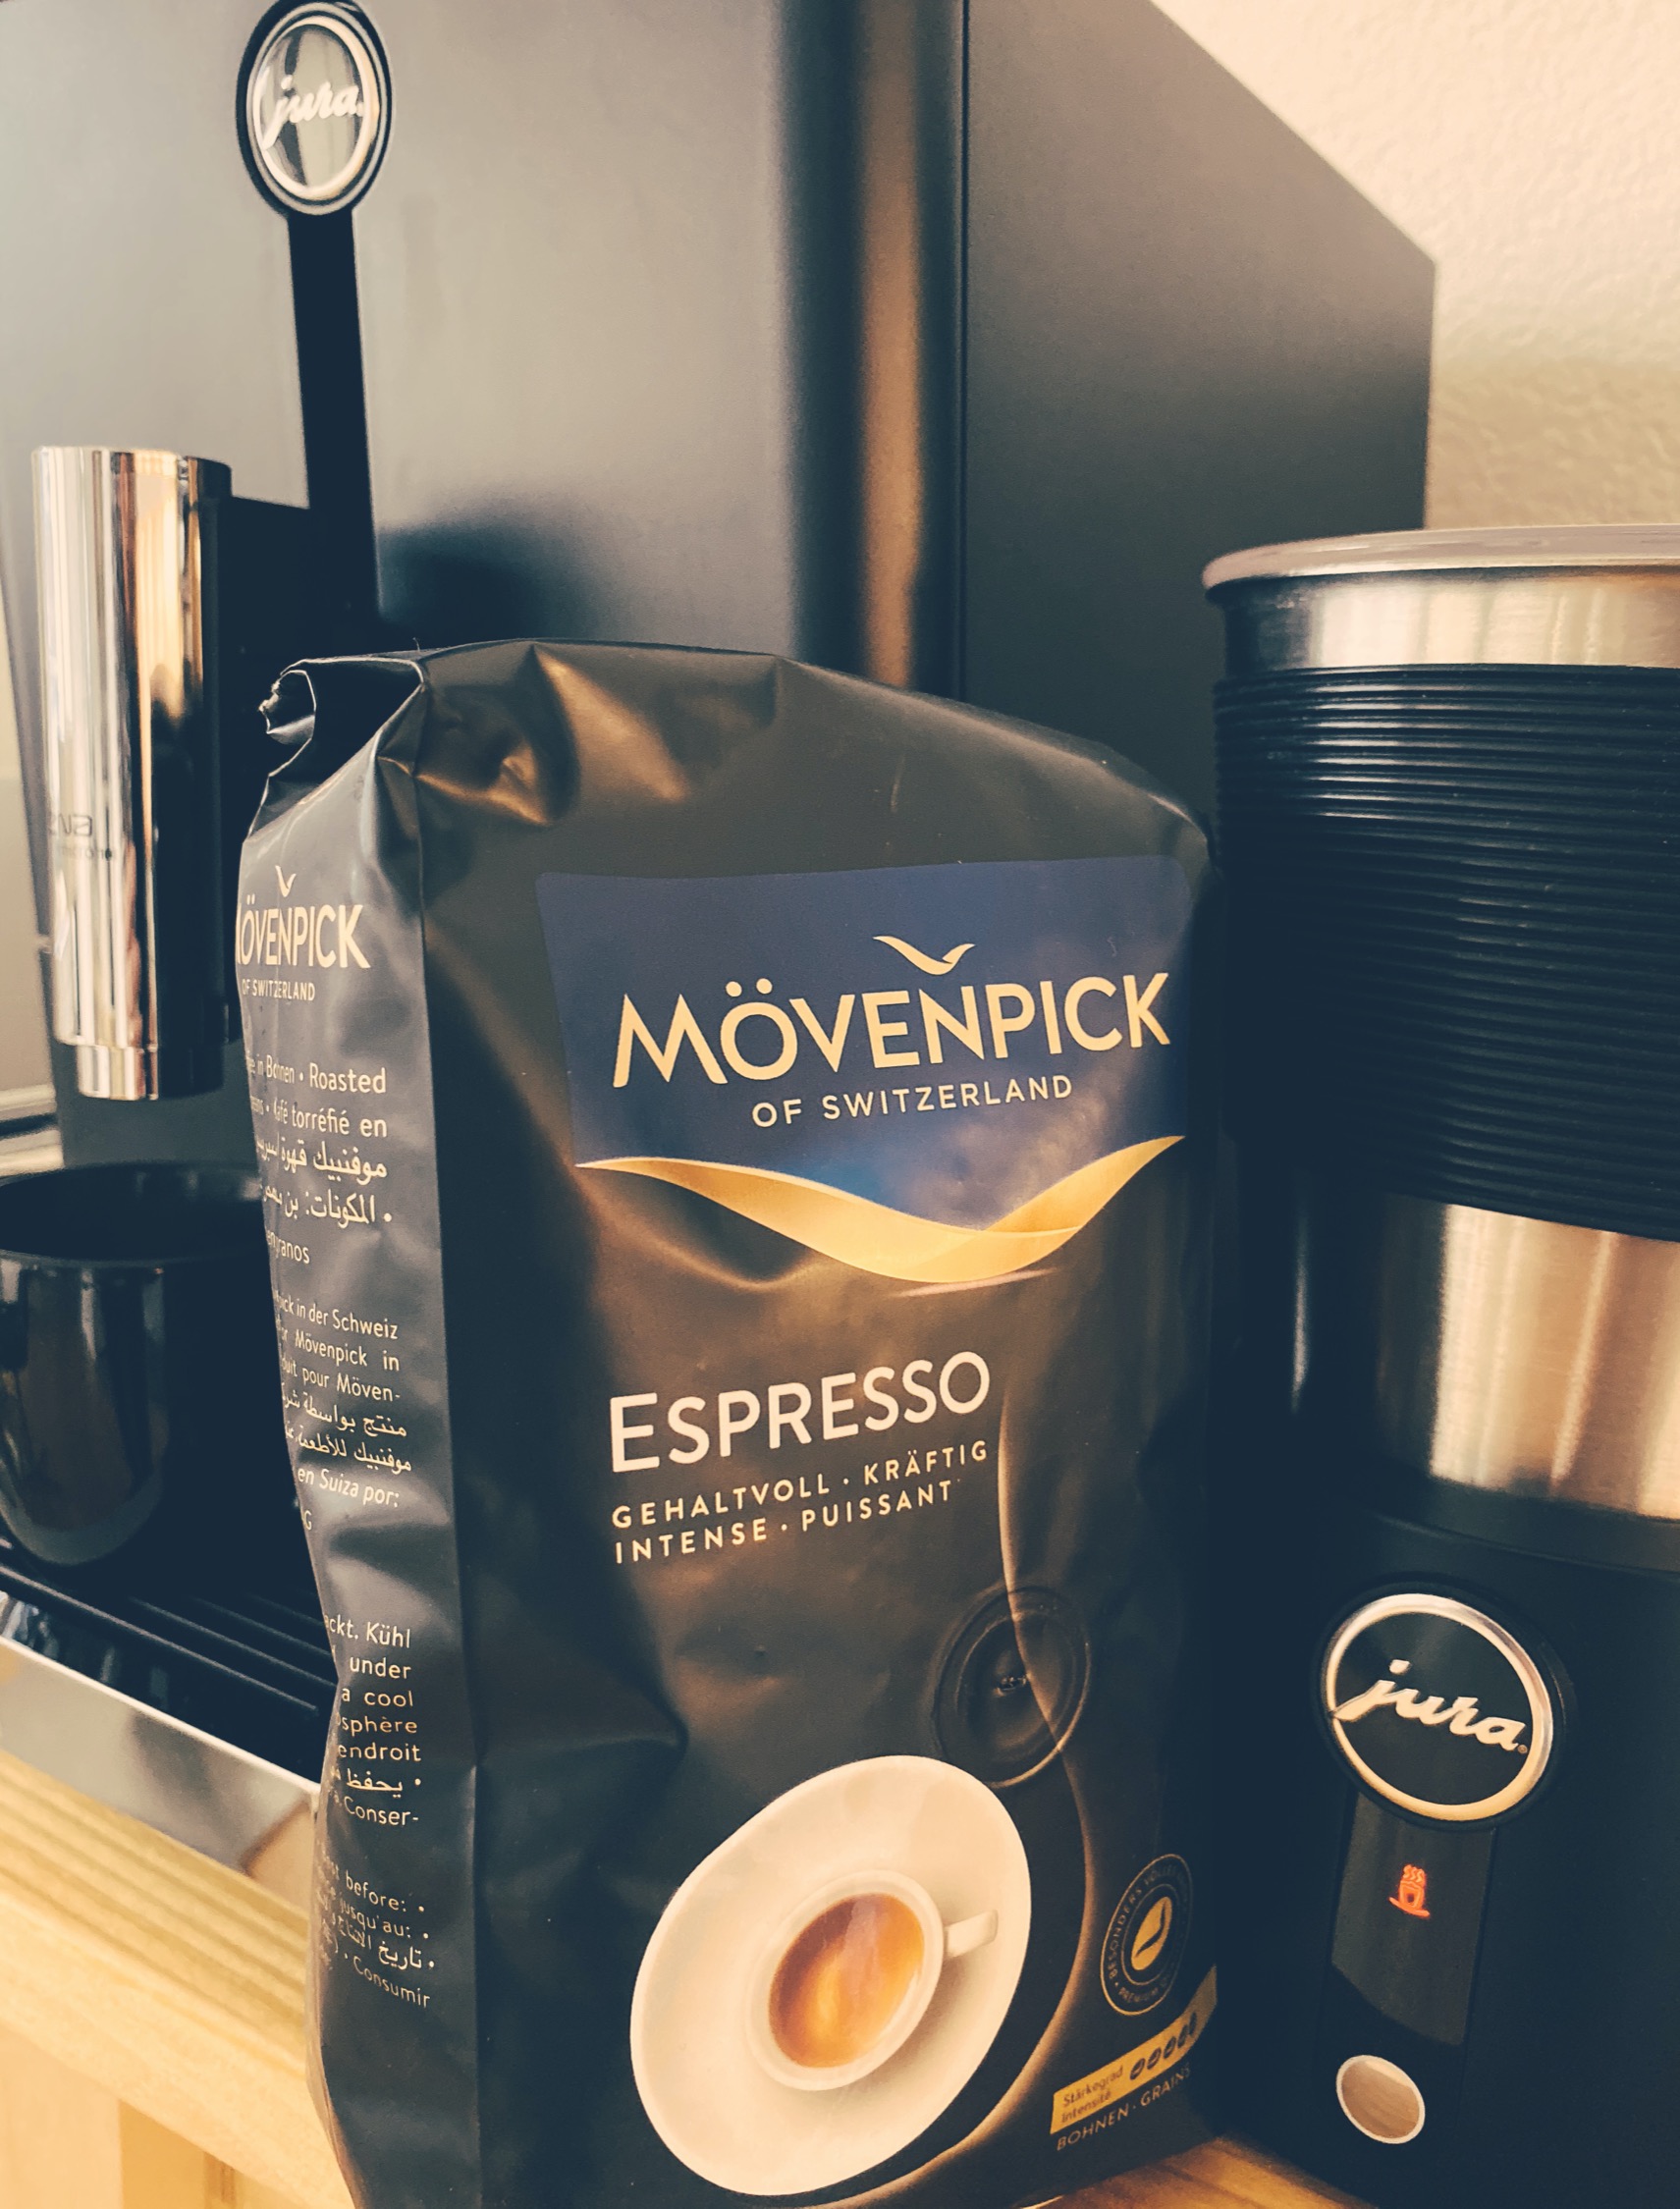 Mövenpick Espresso, Jura coffee machine and Jura automatic milk frother